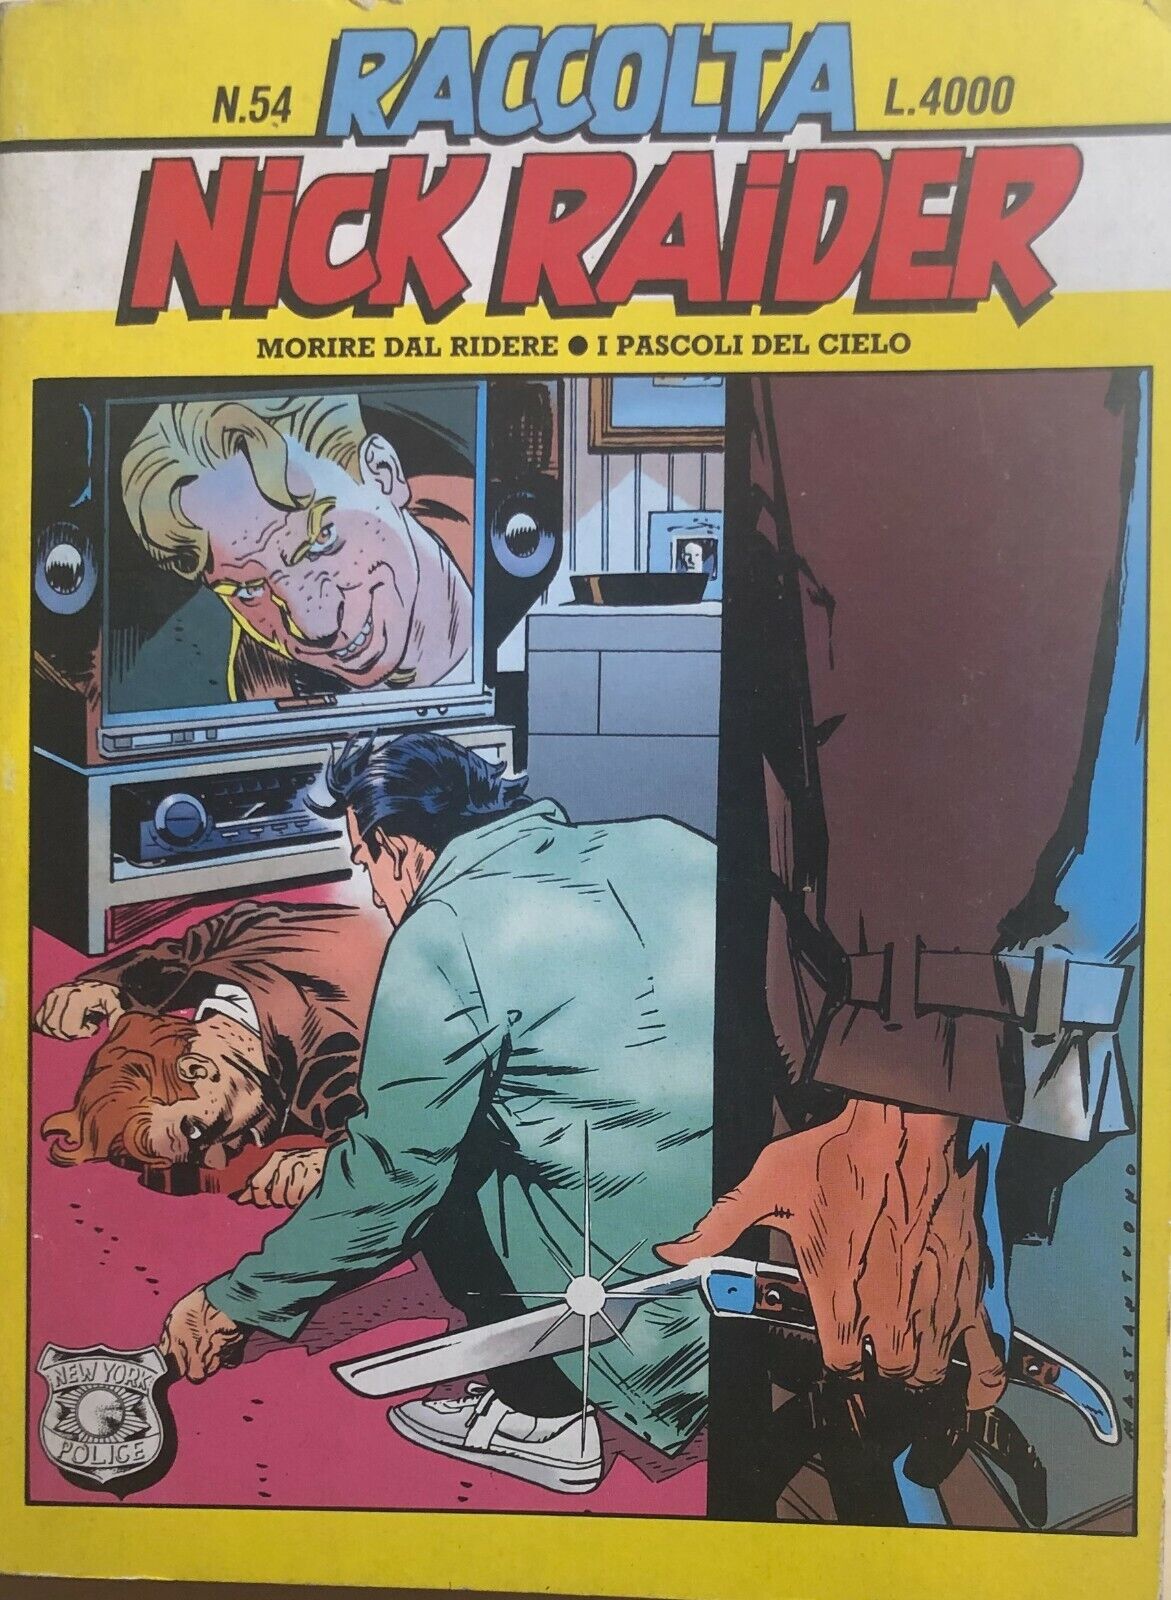 Raccolta Nick Raider n. 54 di Aa.vv., 1999, Sergio Bonelli